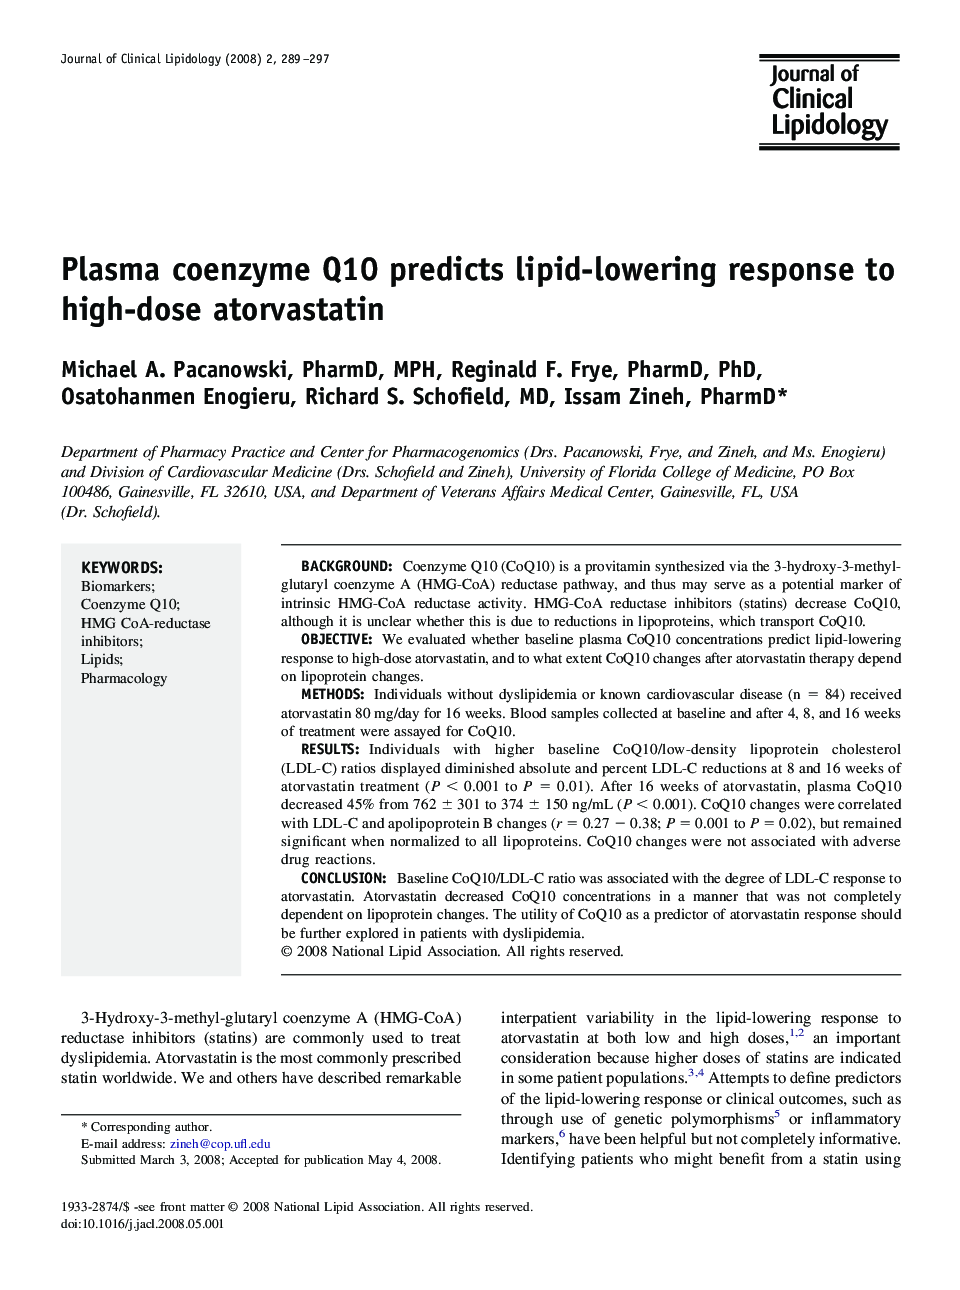 Plasma coenzyme Q10 predicts lipid-lowering response to high-dose atorvastatin